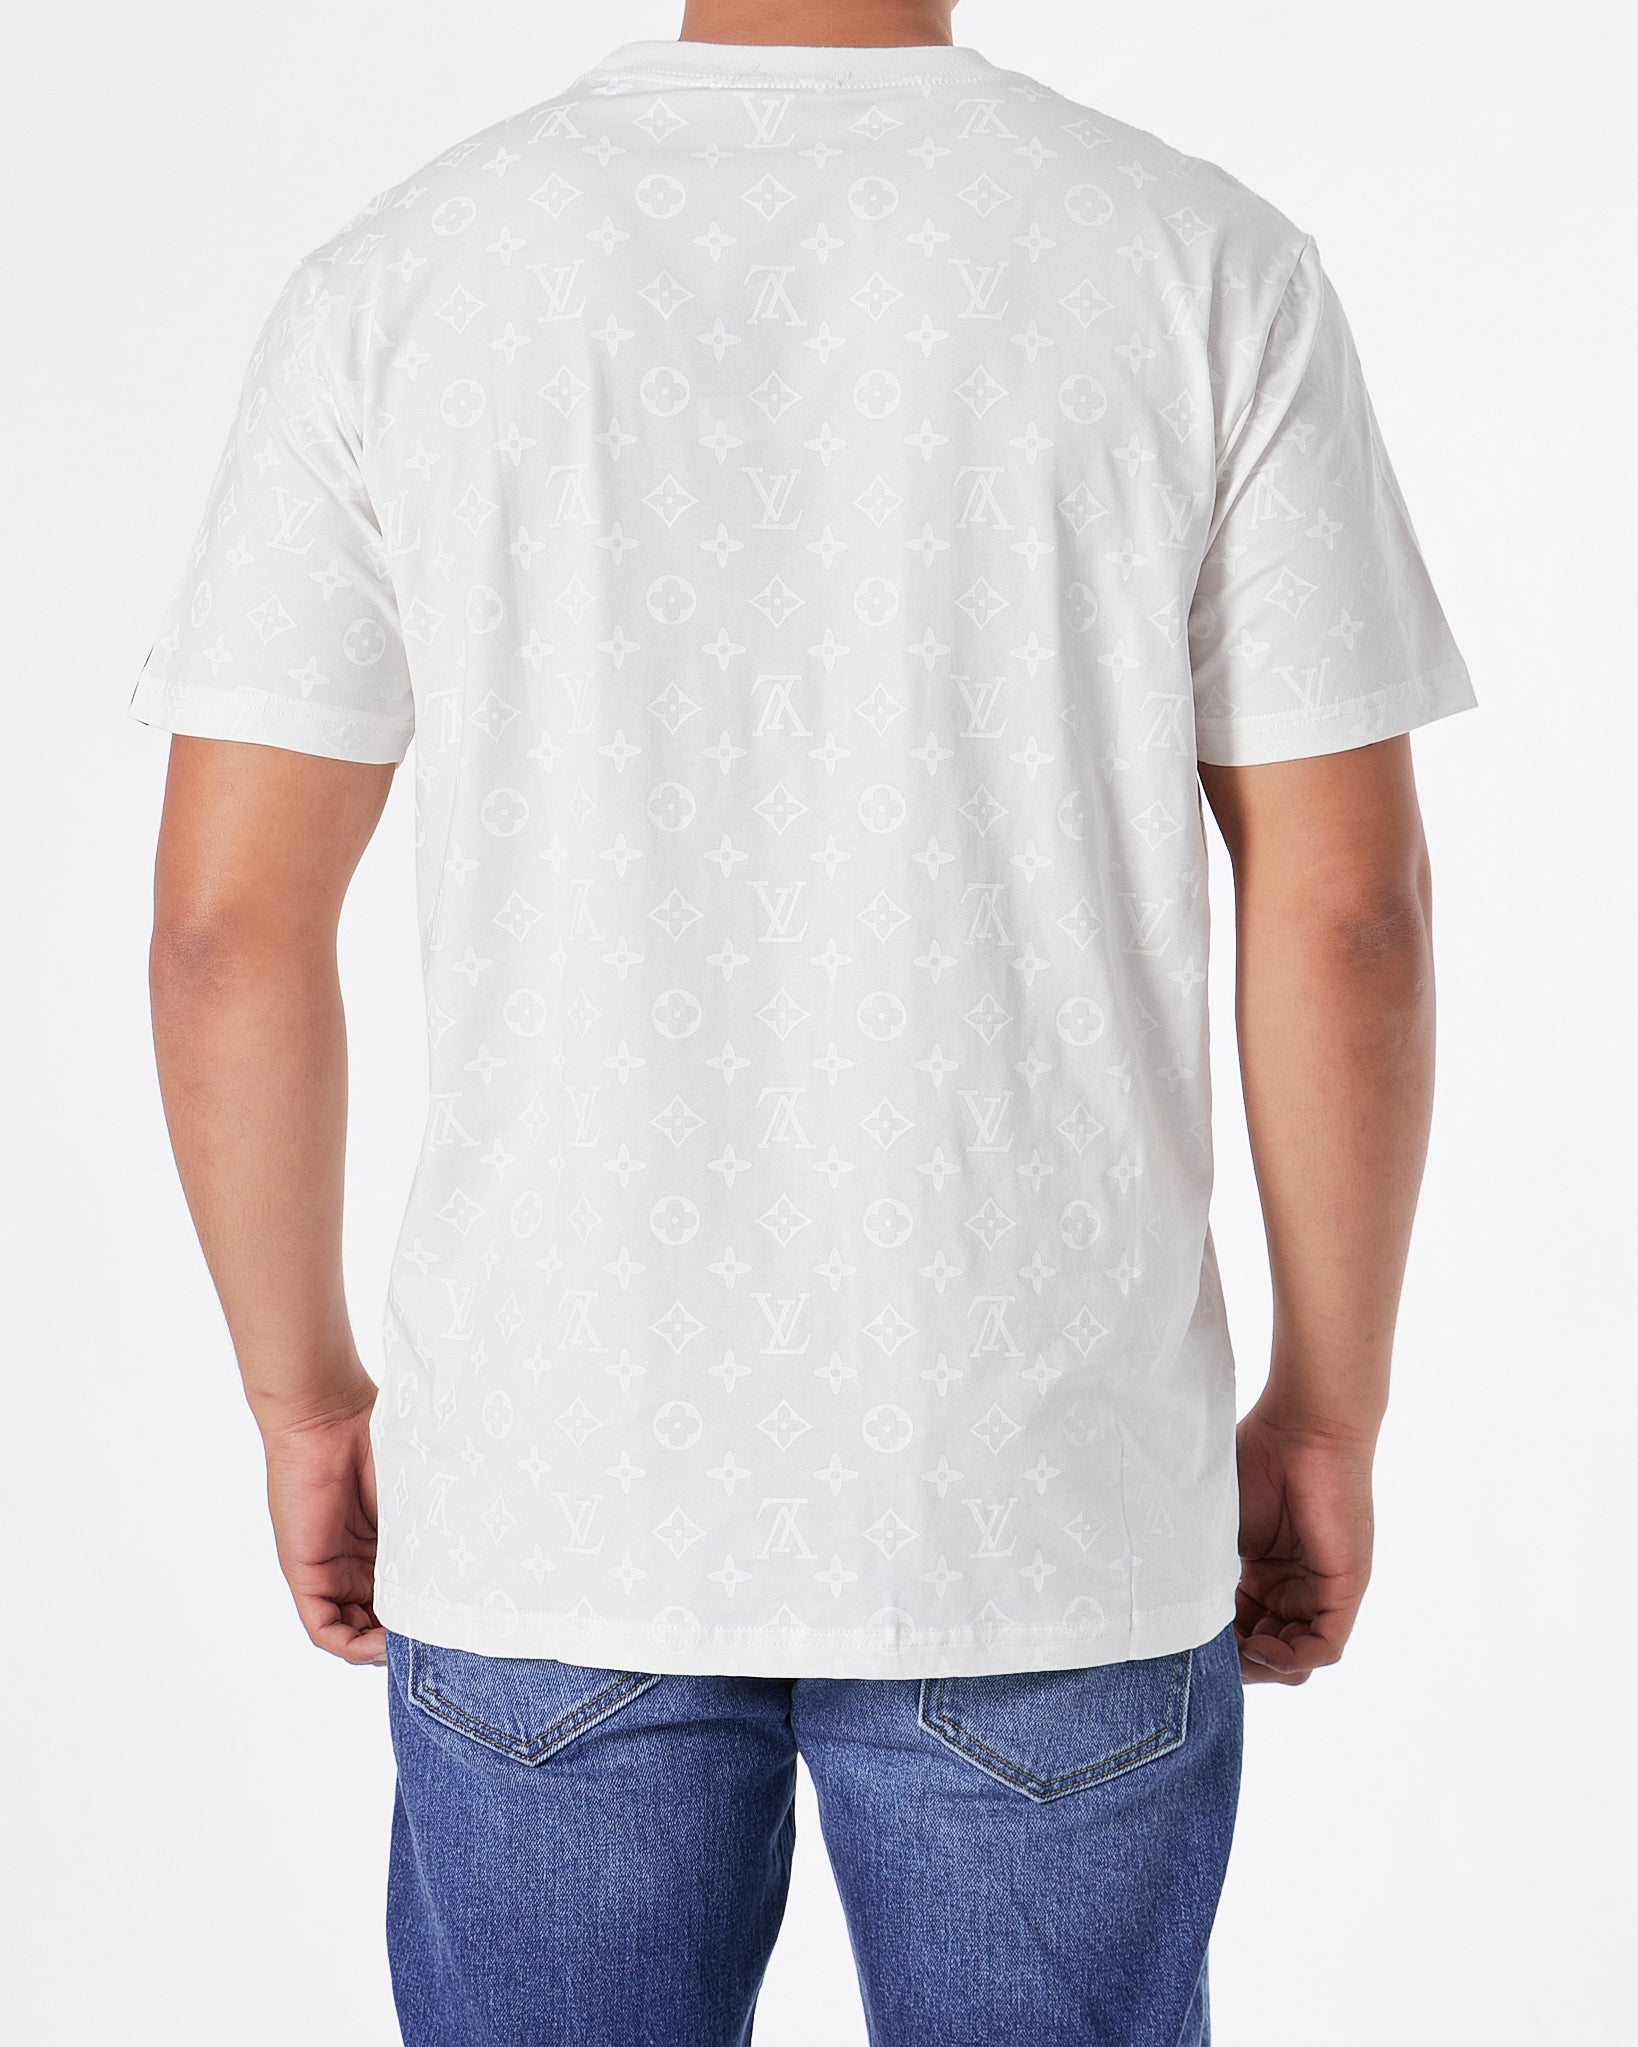 LV Monogram Over Printed Men Cream T-Shirt 24.90